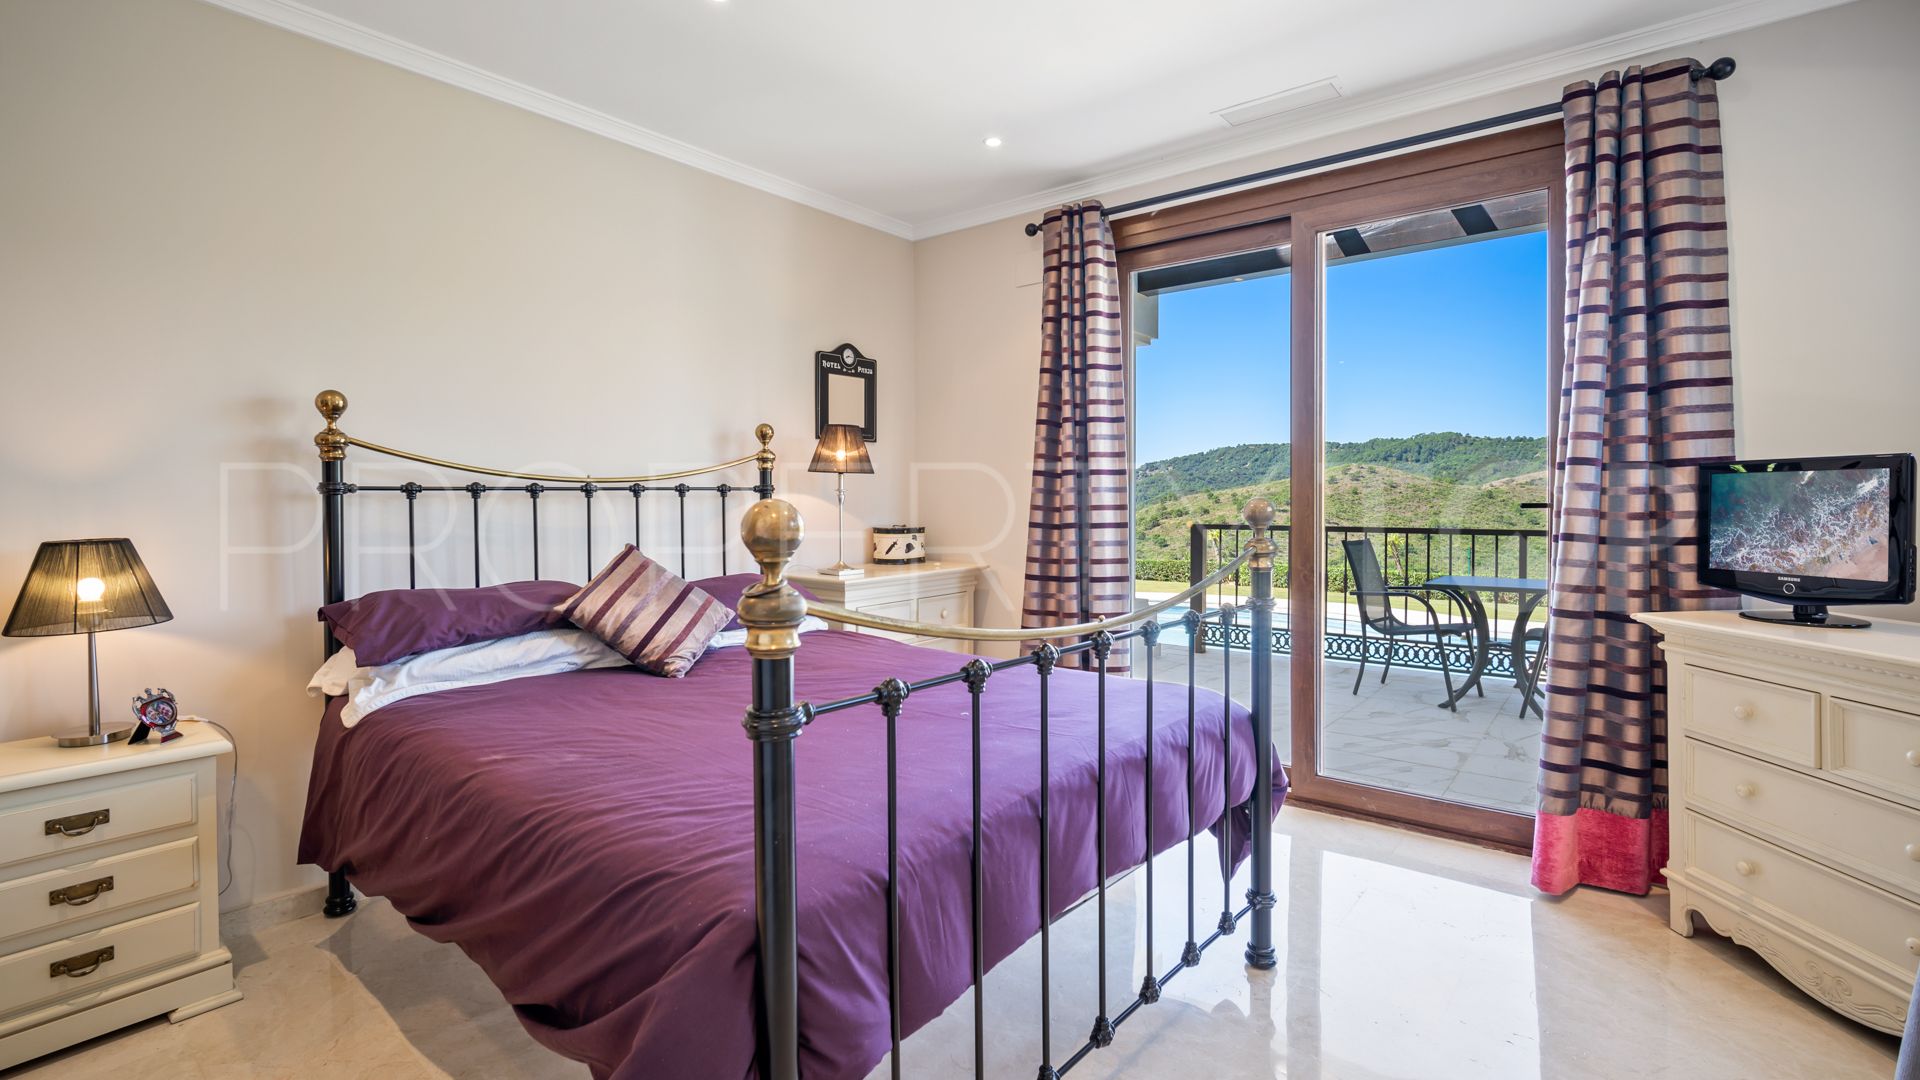 6 bedrooms villa in Monte Mayor for sale